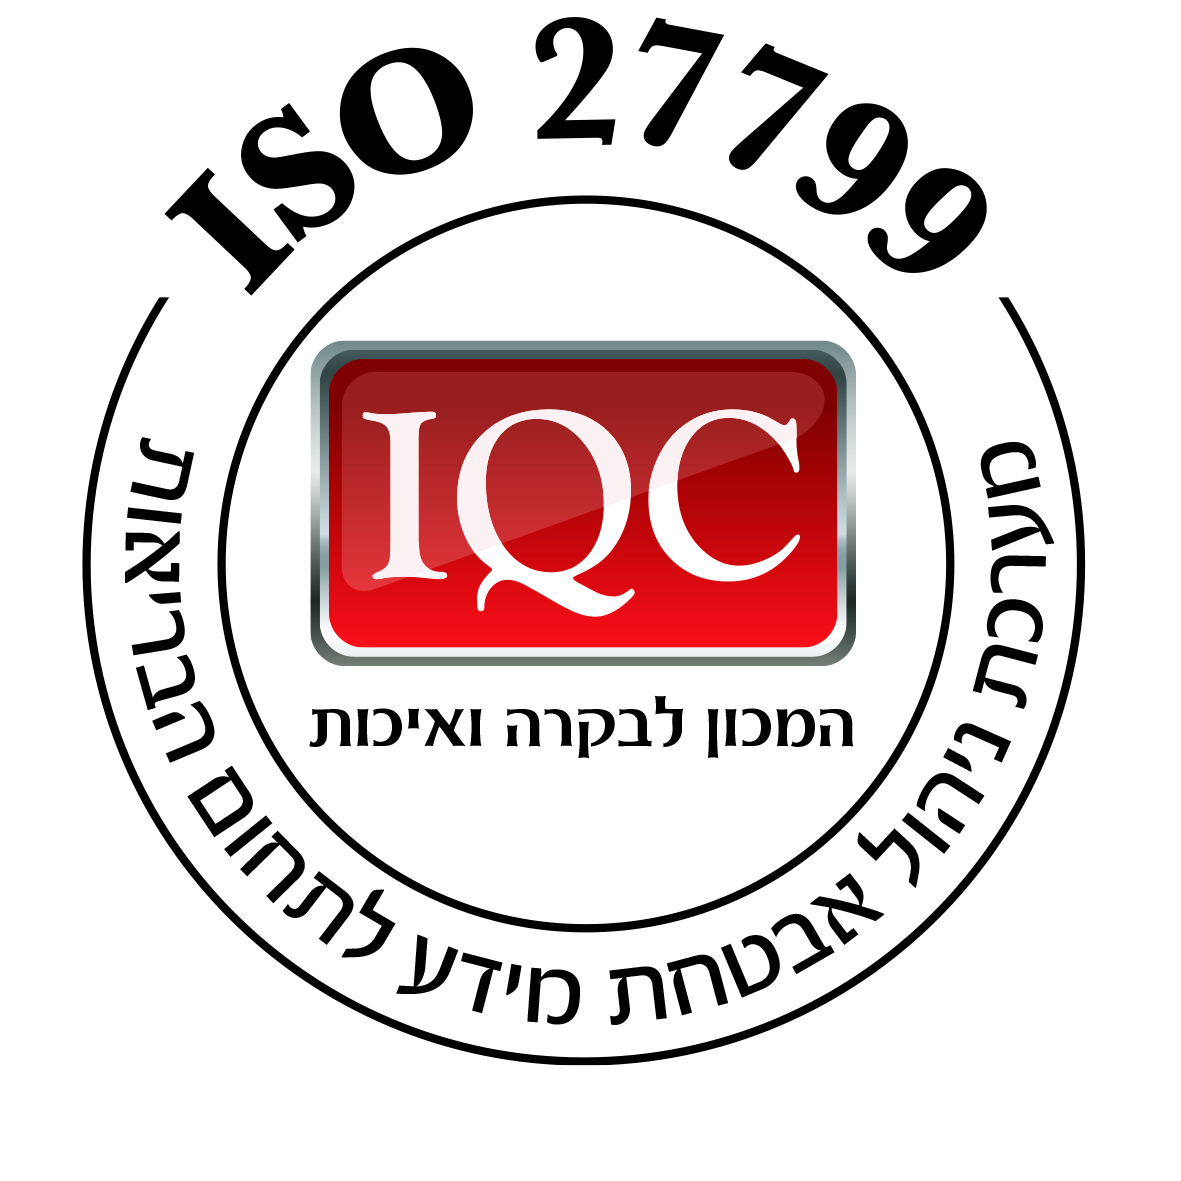 ISO 27799 - תקן לאבטחת מידע רפואי